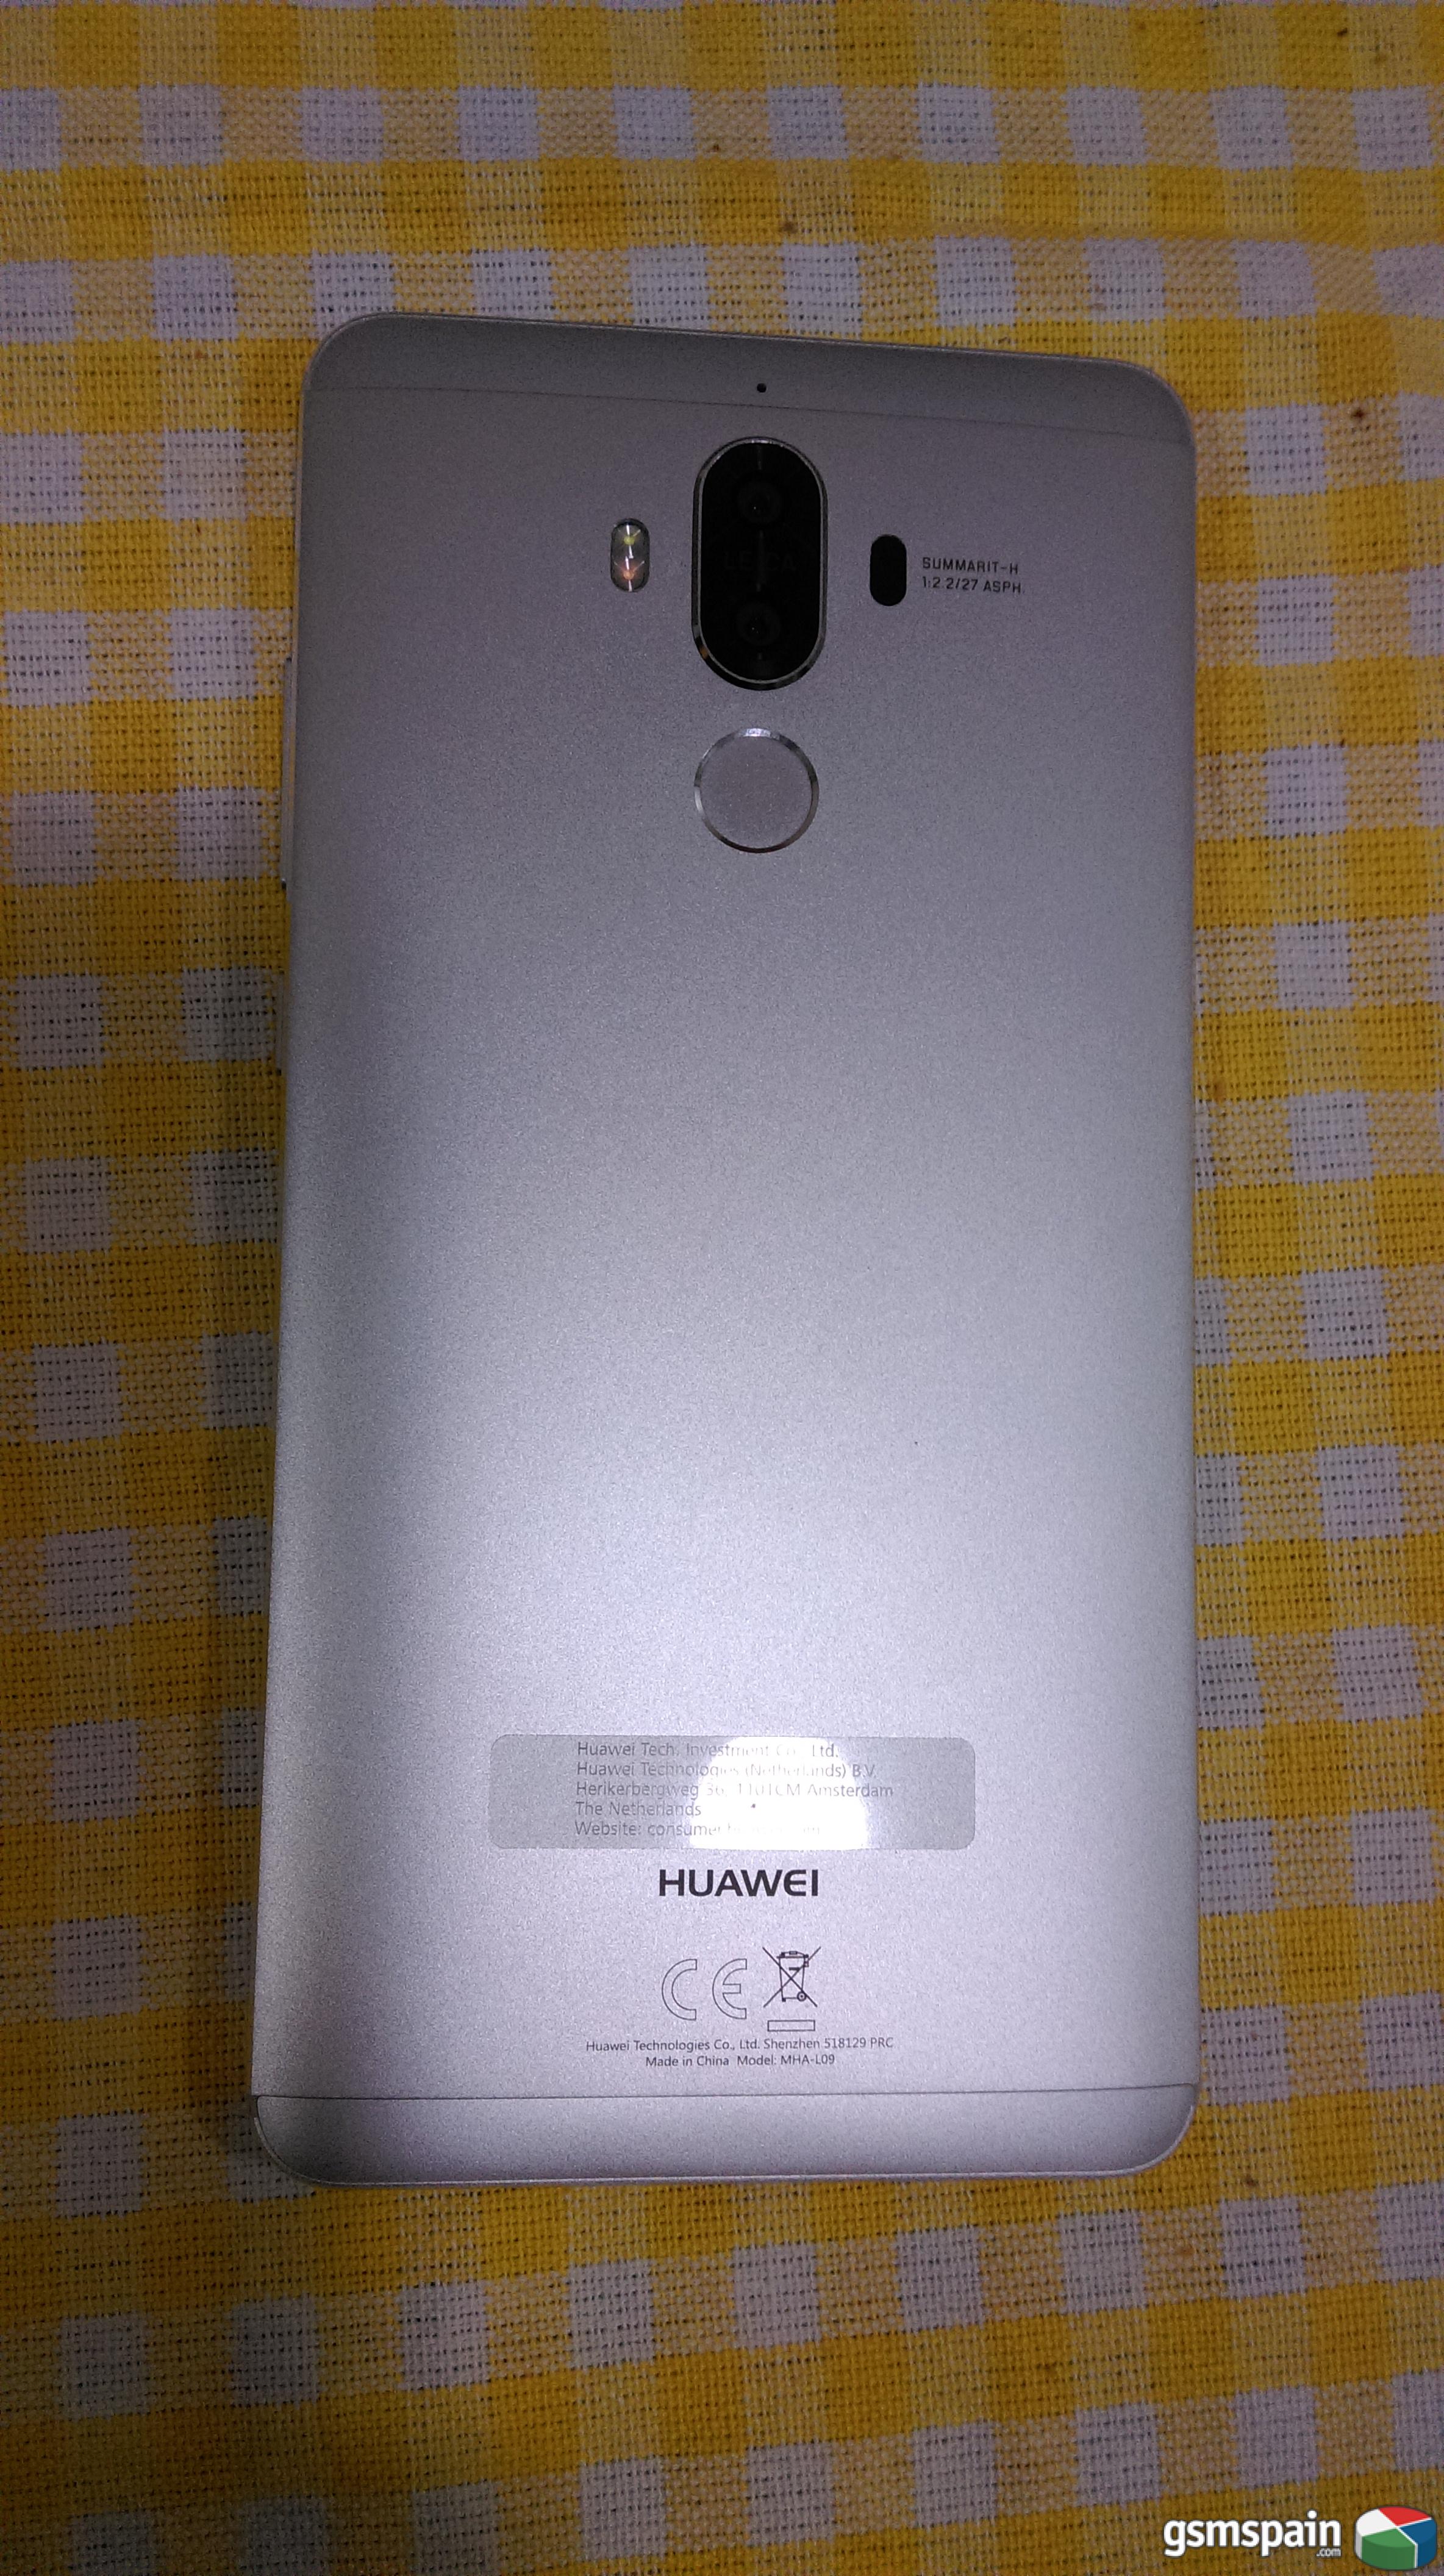 [CAMBIO] Huawei Mate 9 blanco